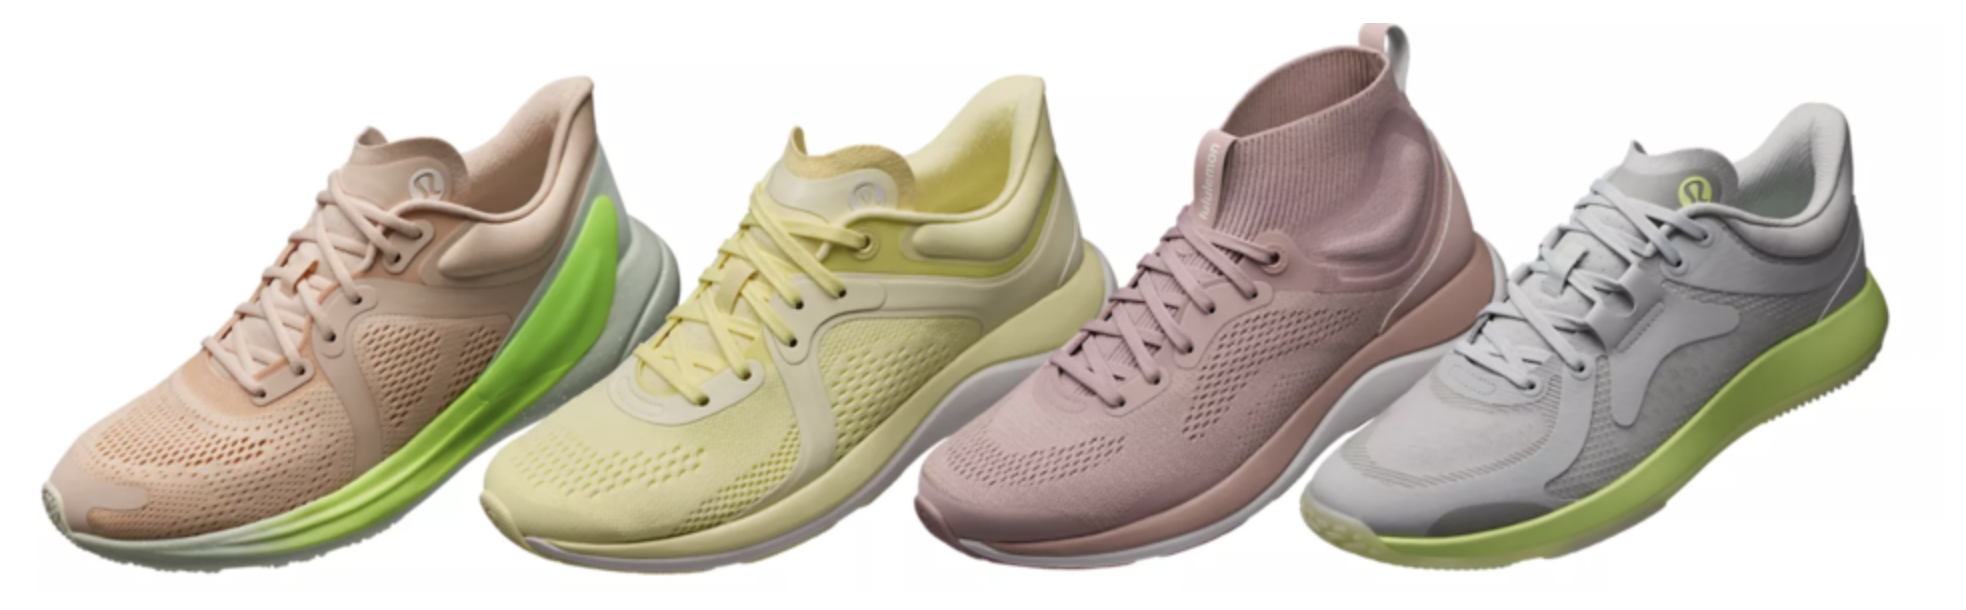 Difuminar Dirección Giro de vuelta Nike attaque deux sociétés en justice pour avoir repris le design de ses  chaussures - SportBuzzBusiness.fr